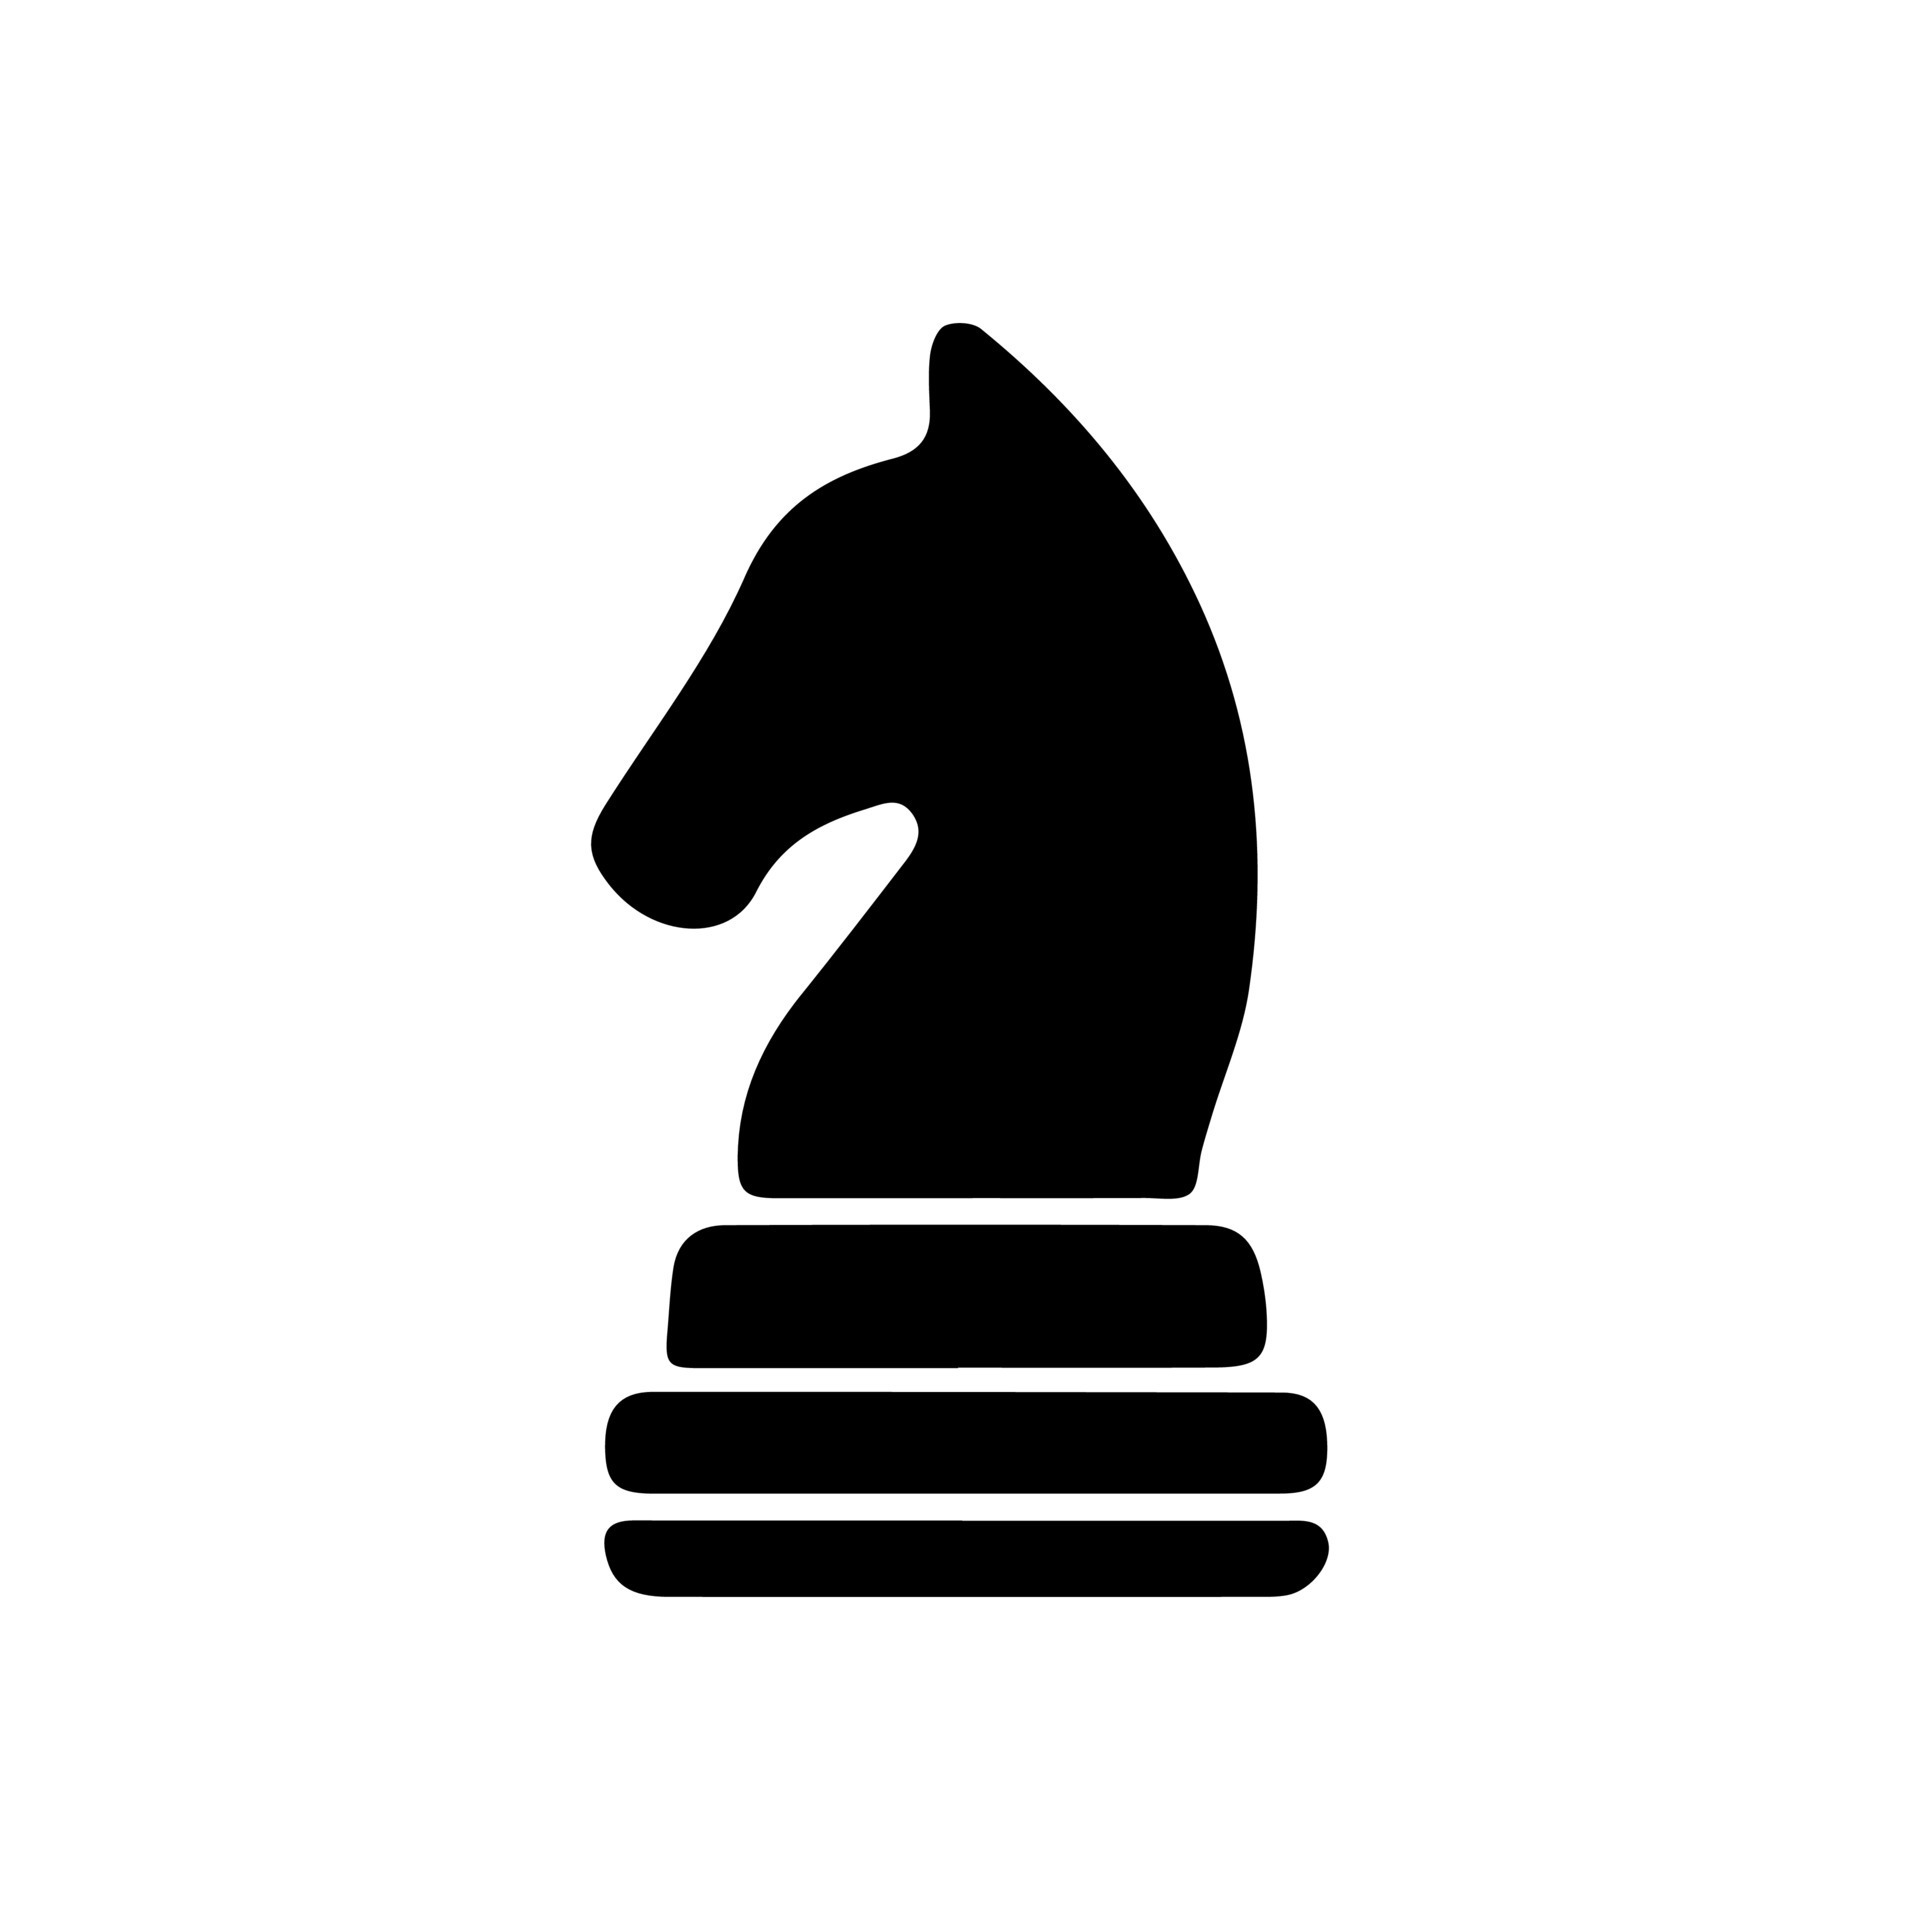 Dois Vetores - Peças De Xadrez Preto E Branco - Cavalo. Elementos